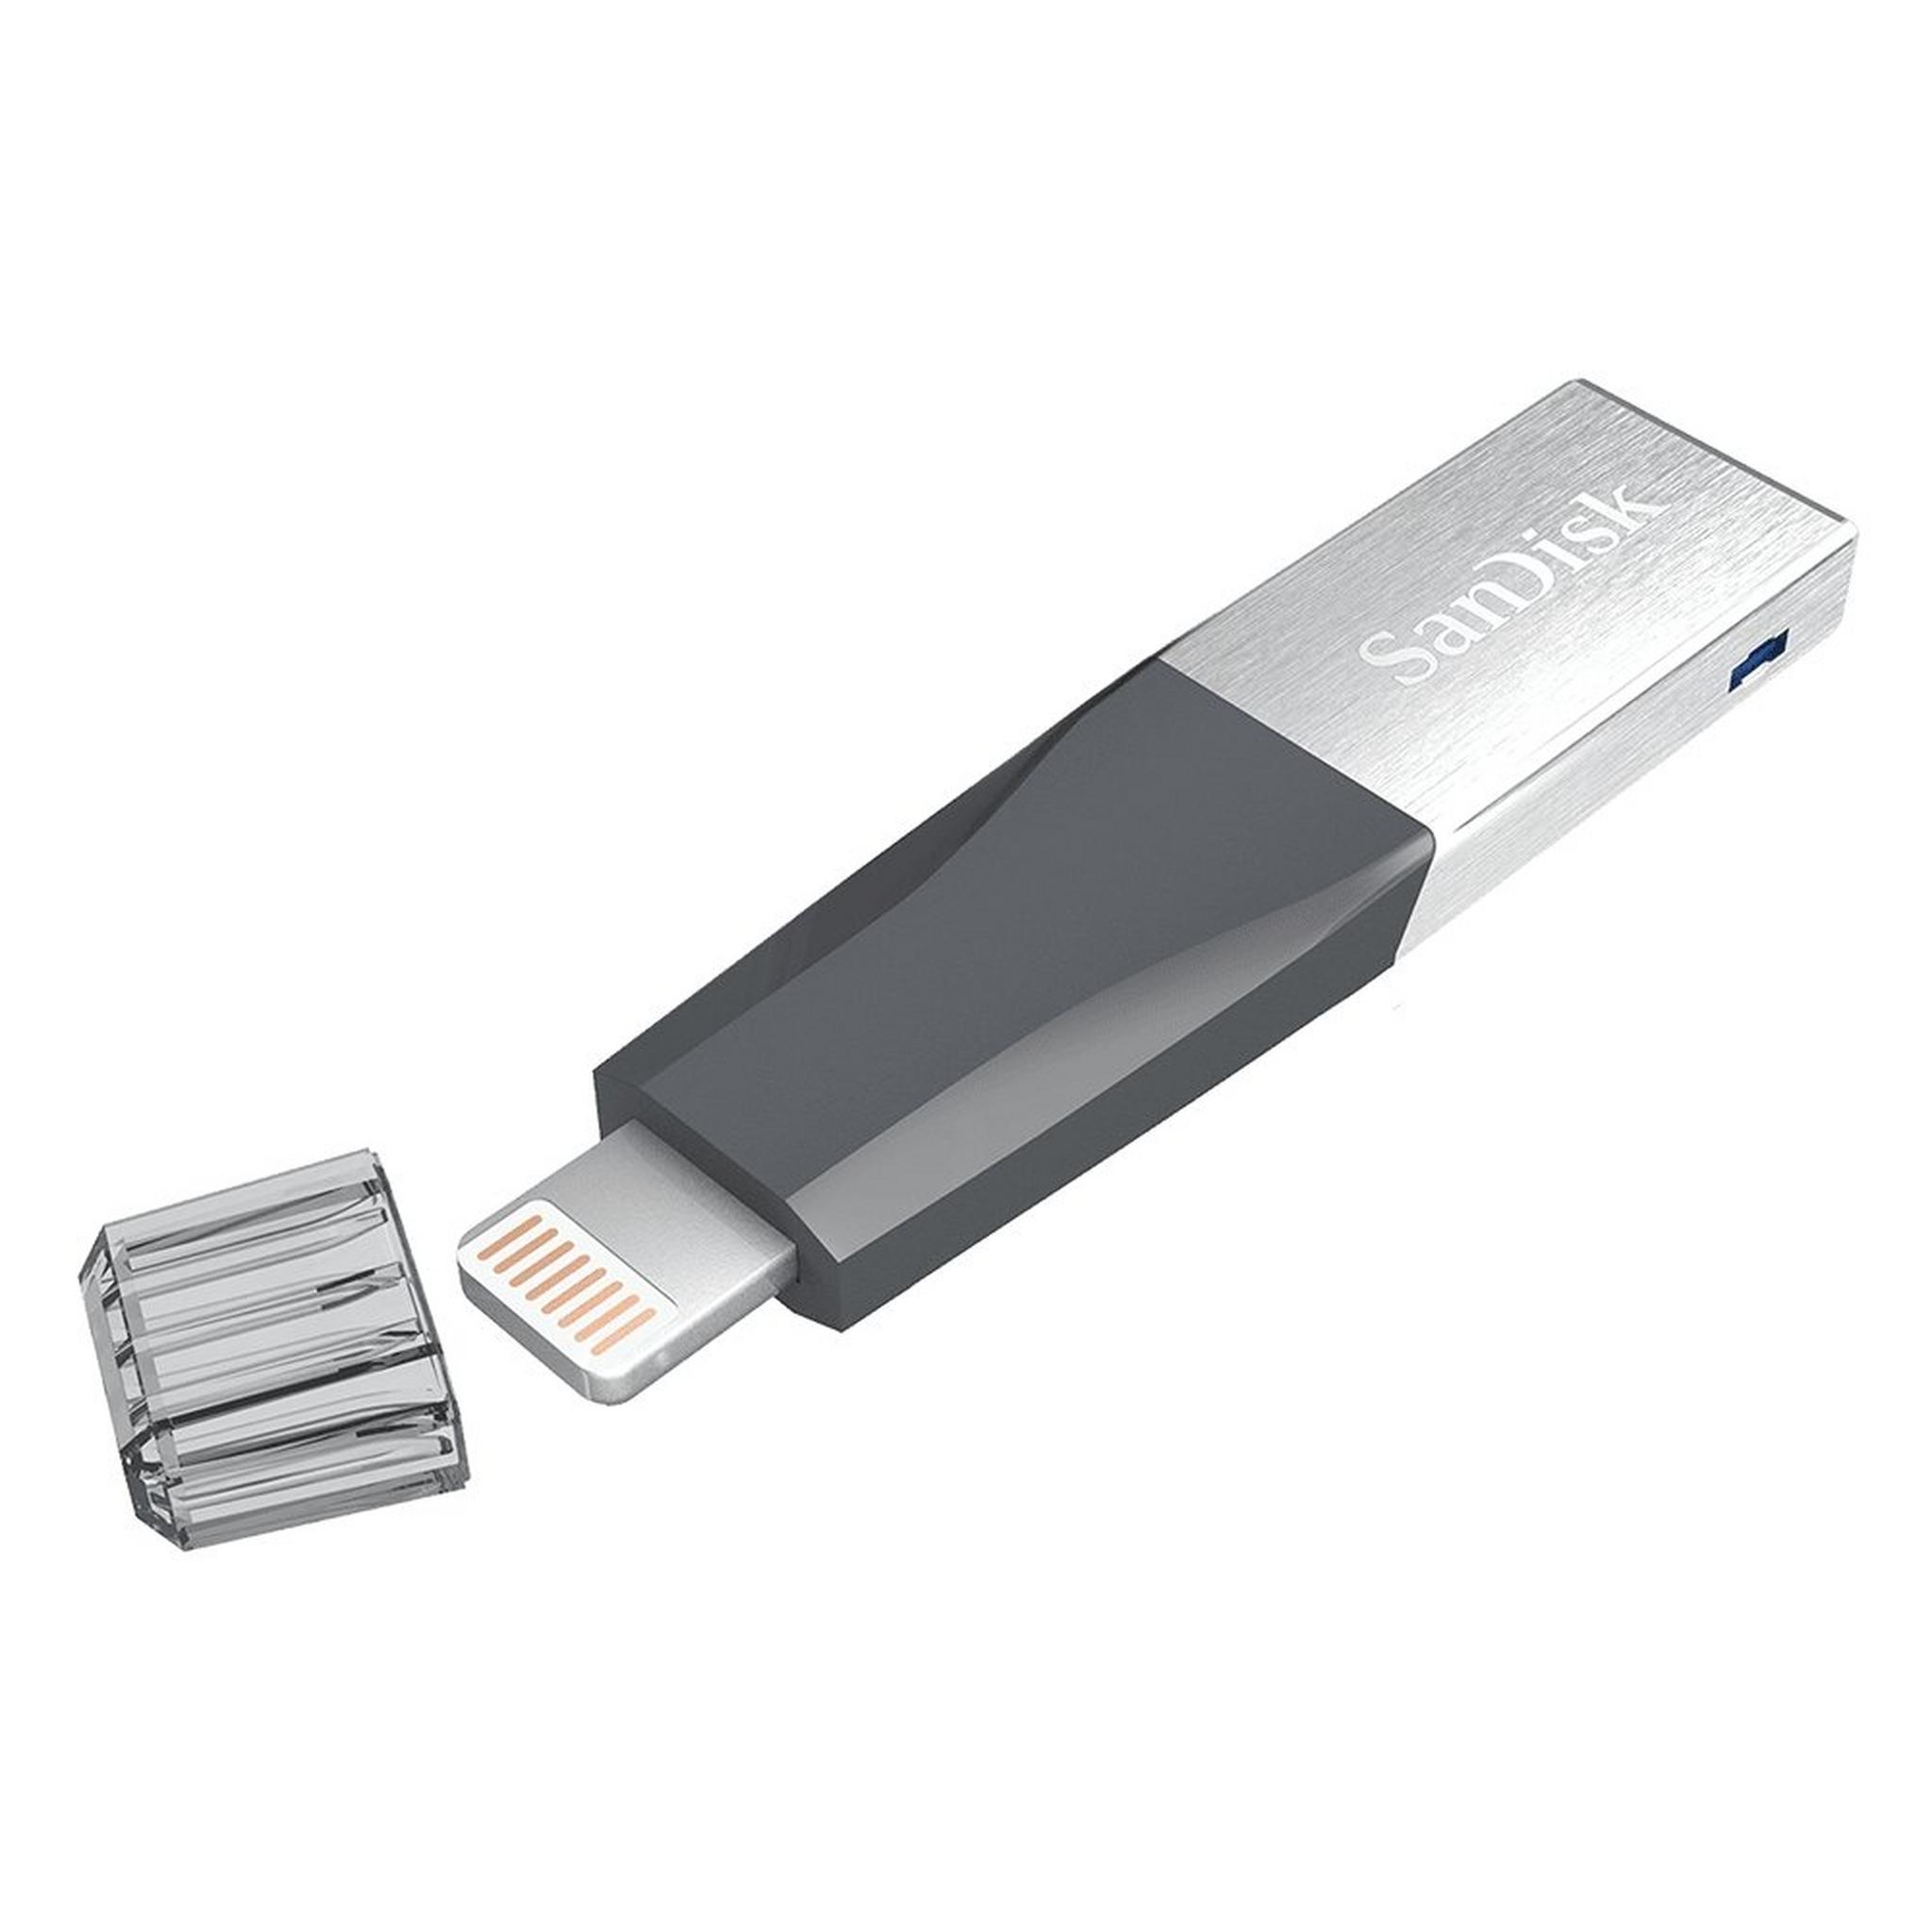 Sandisk iXpand Mini 16GB Flash Drive -  (SDIX40N016GGN6NN)